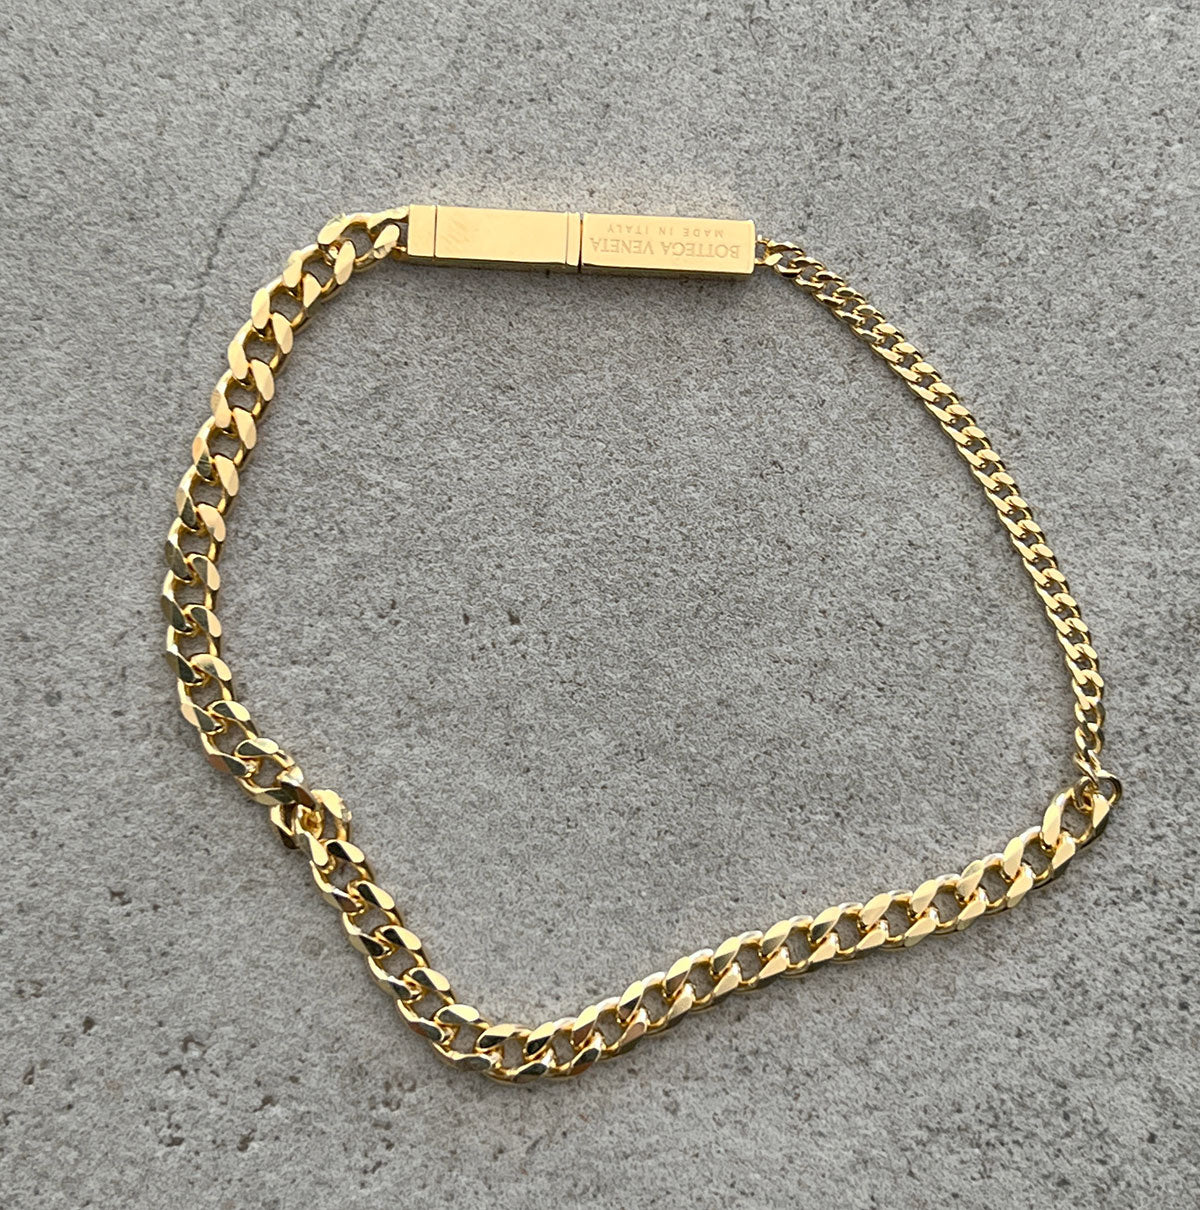 Bottega Veneta Gold-Plated ID Chain Bracelet